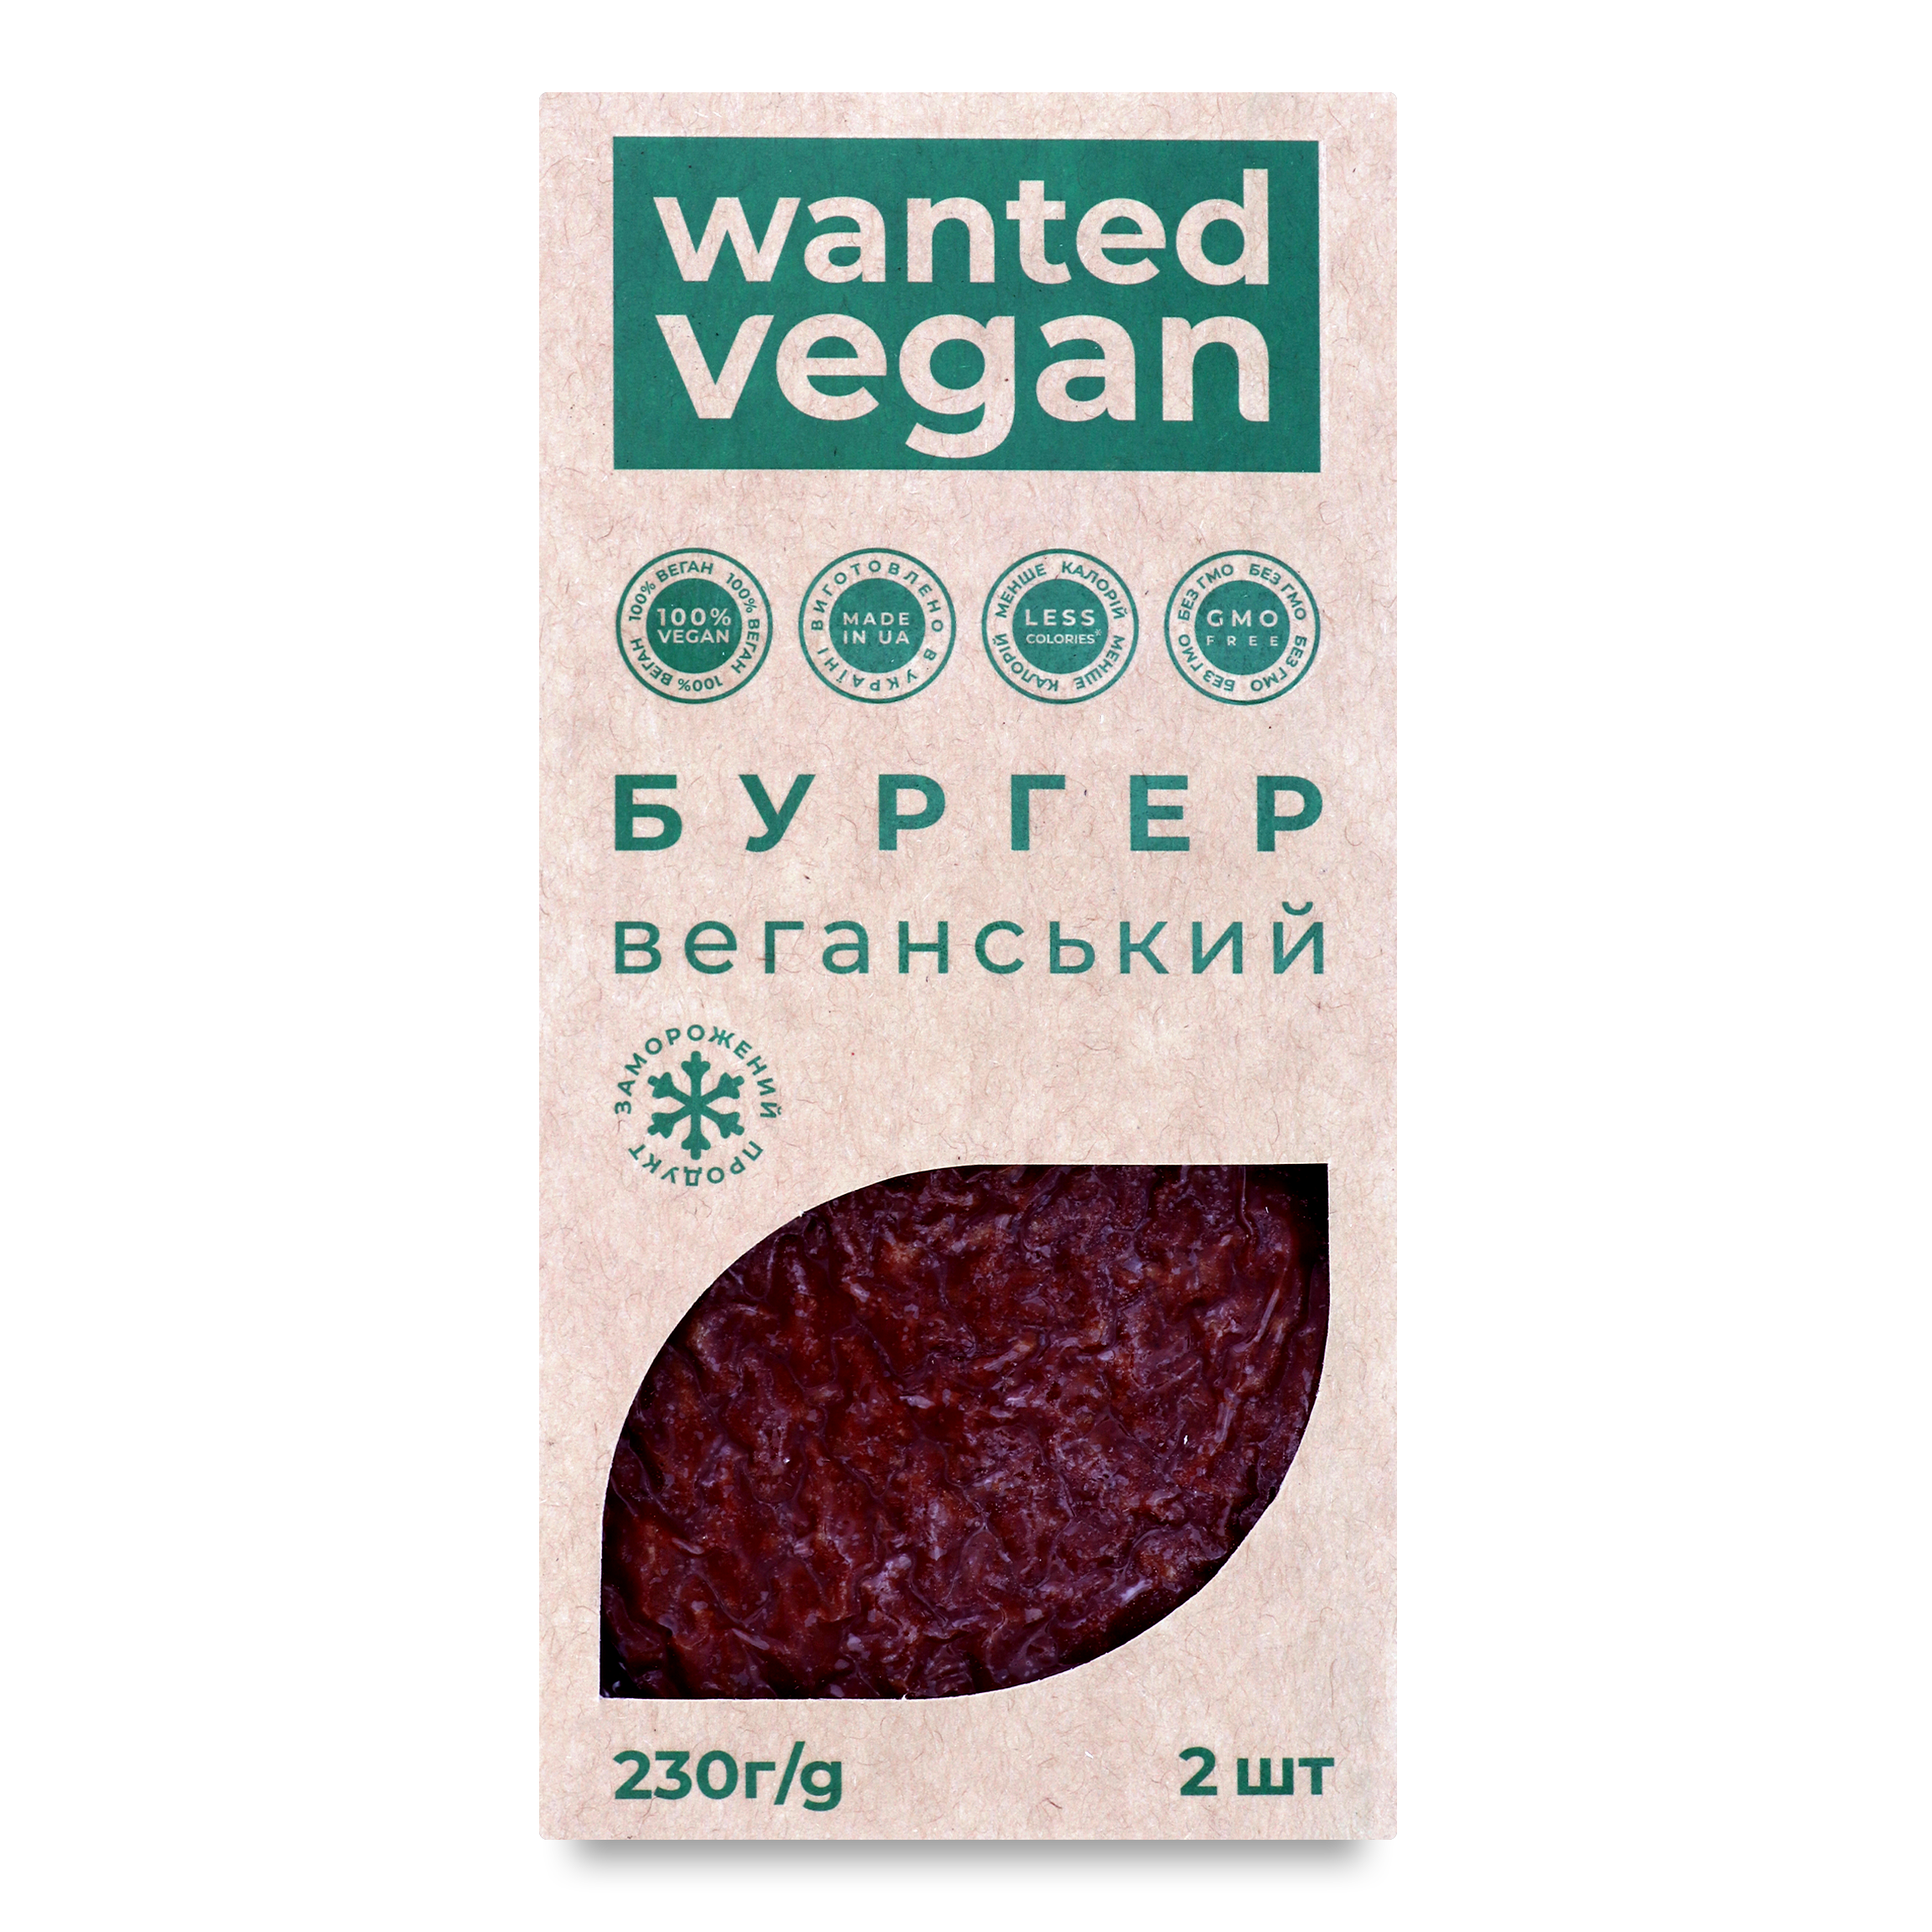 Wanted Vegan burger vegan 230g